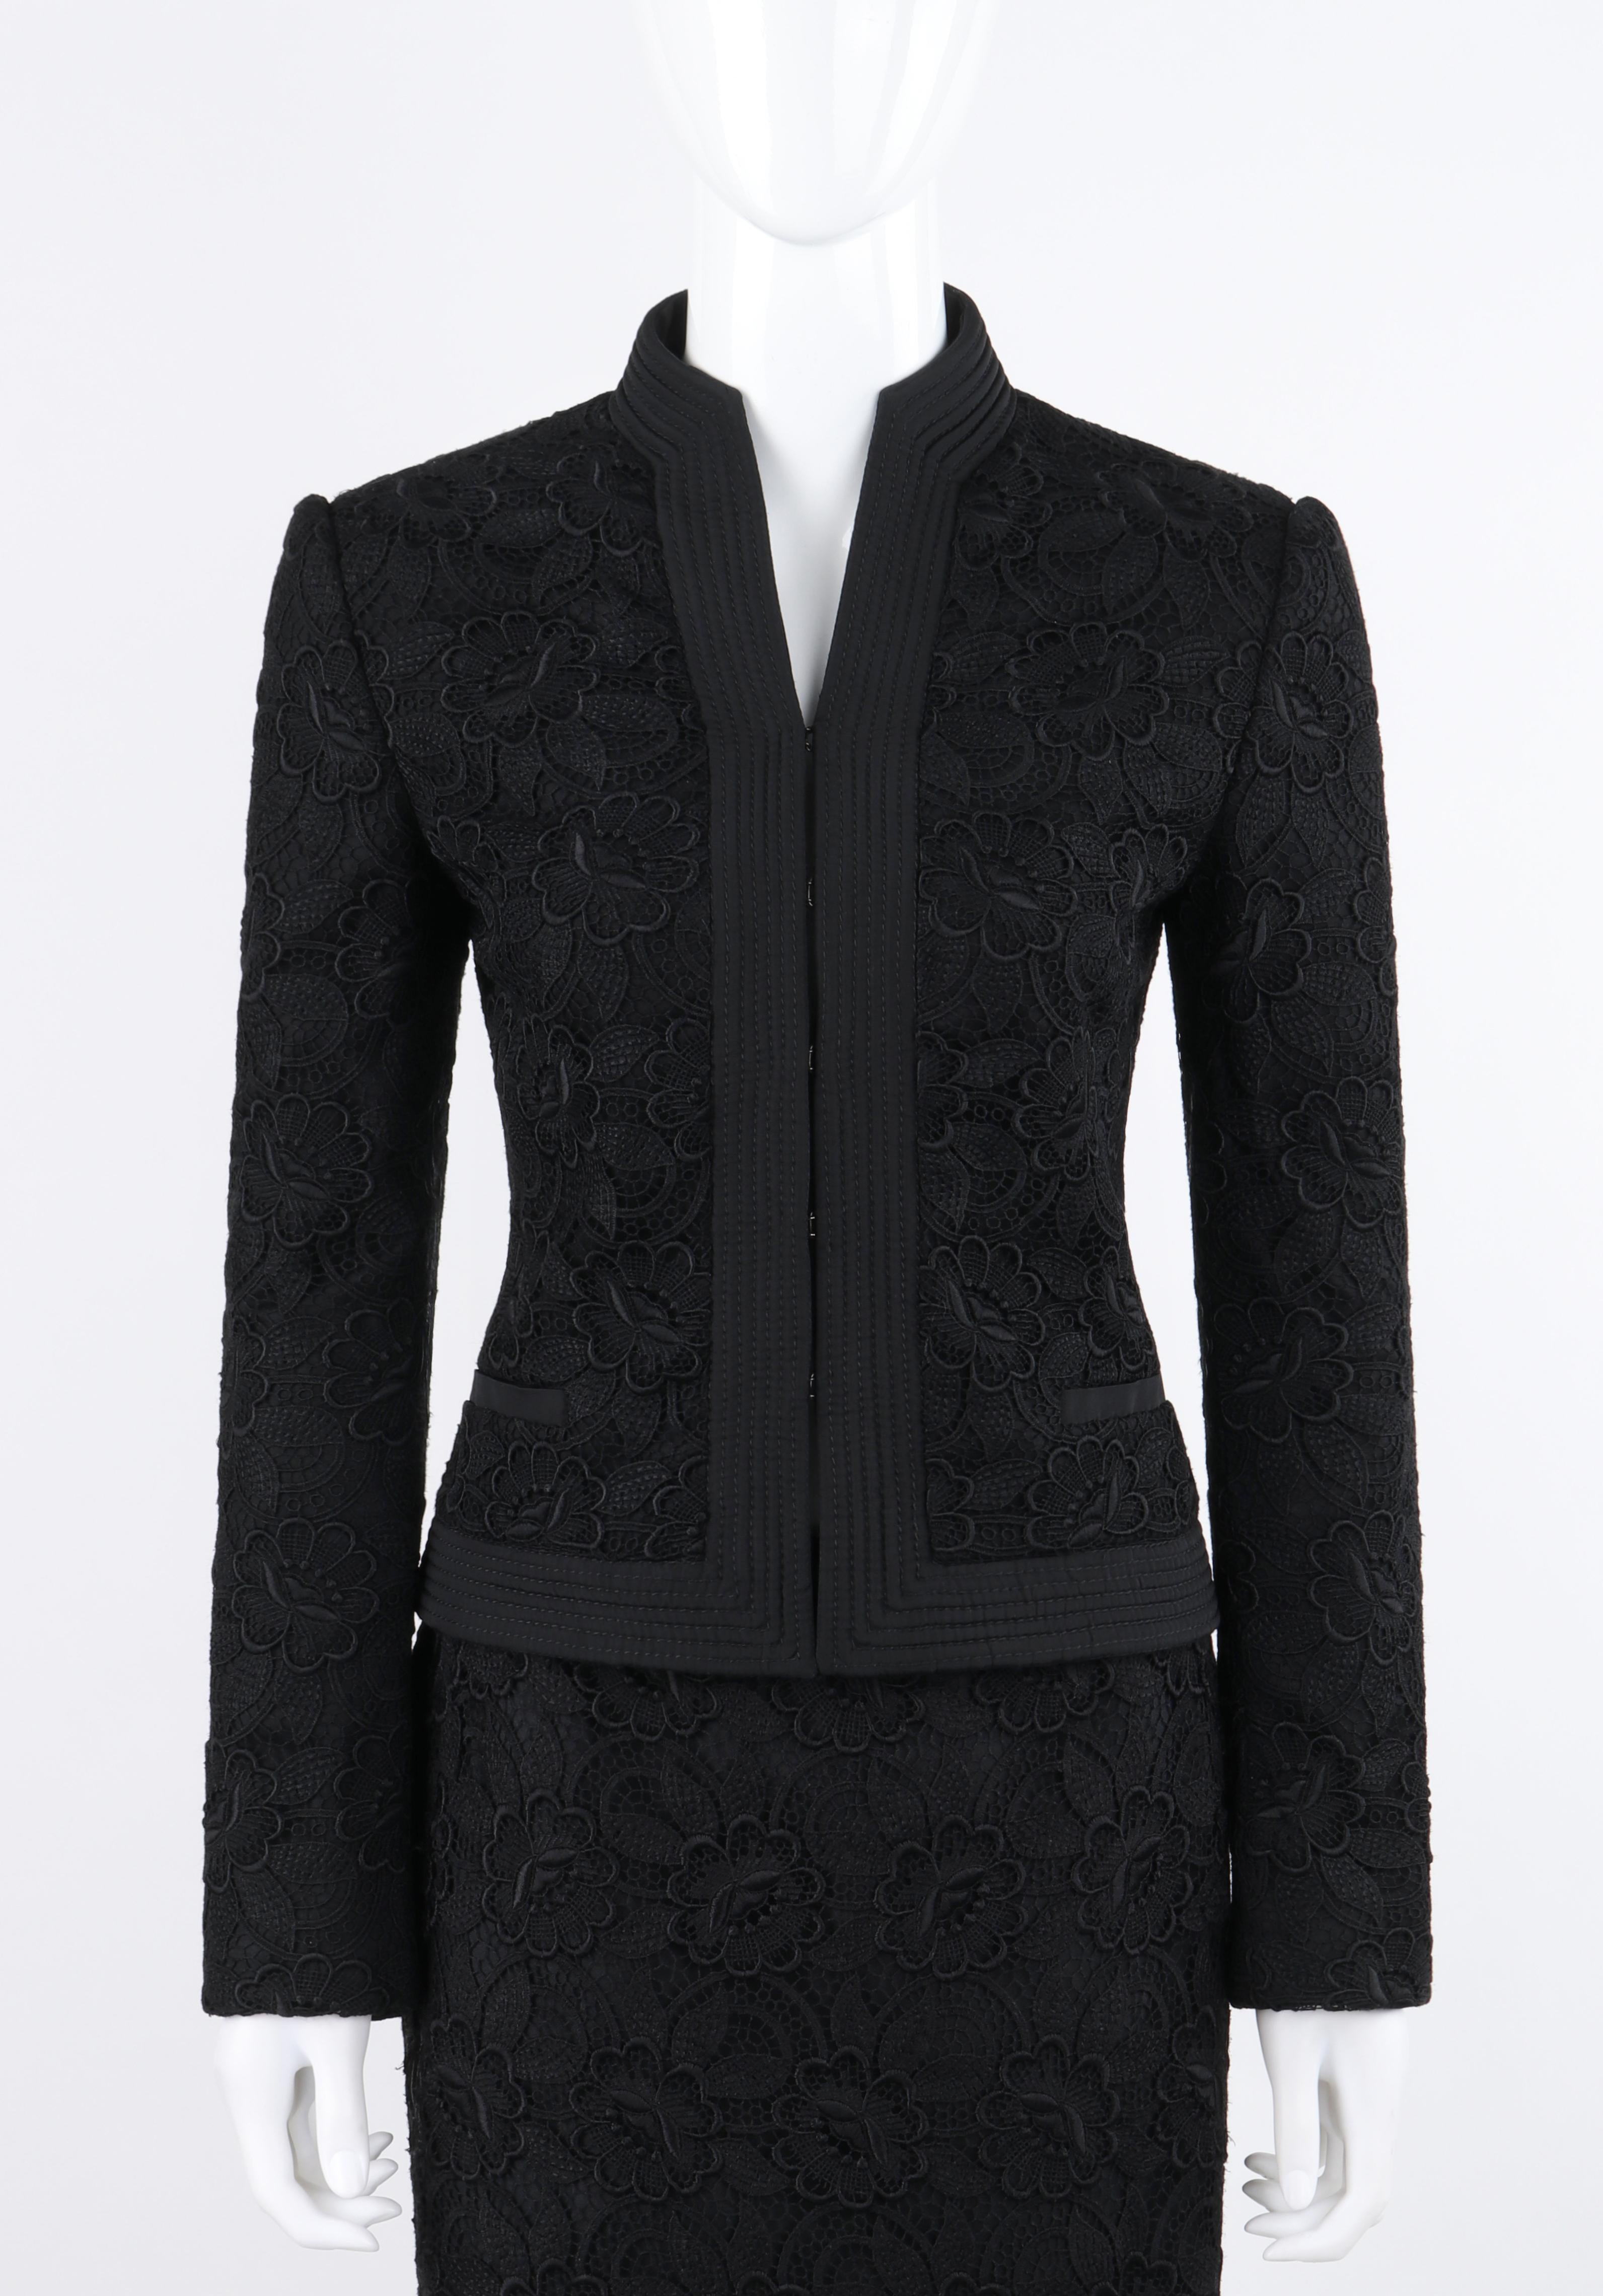 Women's ALEXANDER McQUEEN Pre-Fall 2006 Black Two Piece Lace Jacket Skirt Suit Set For Sale